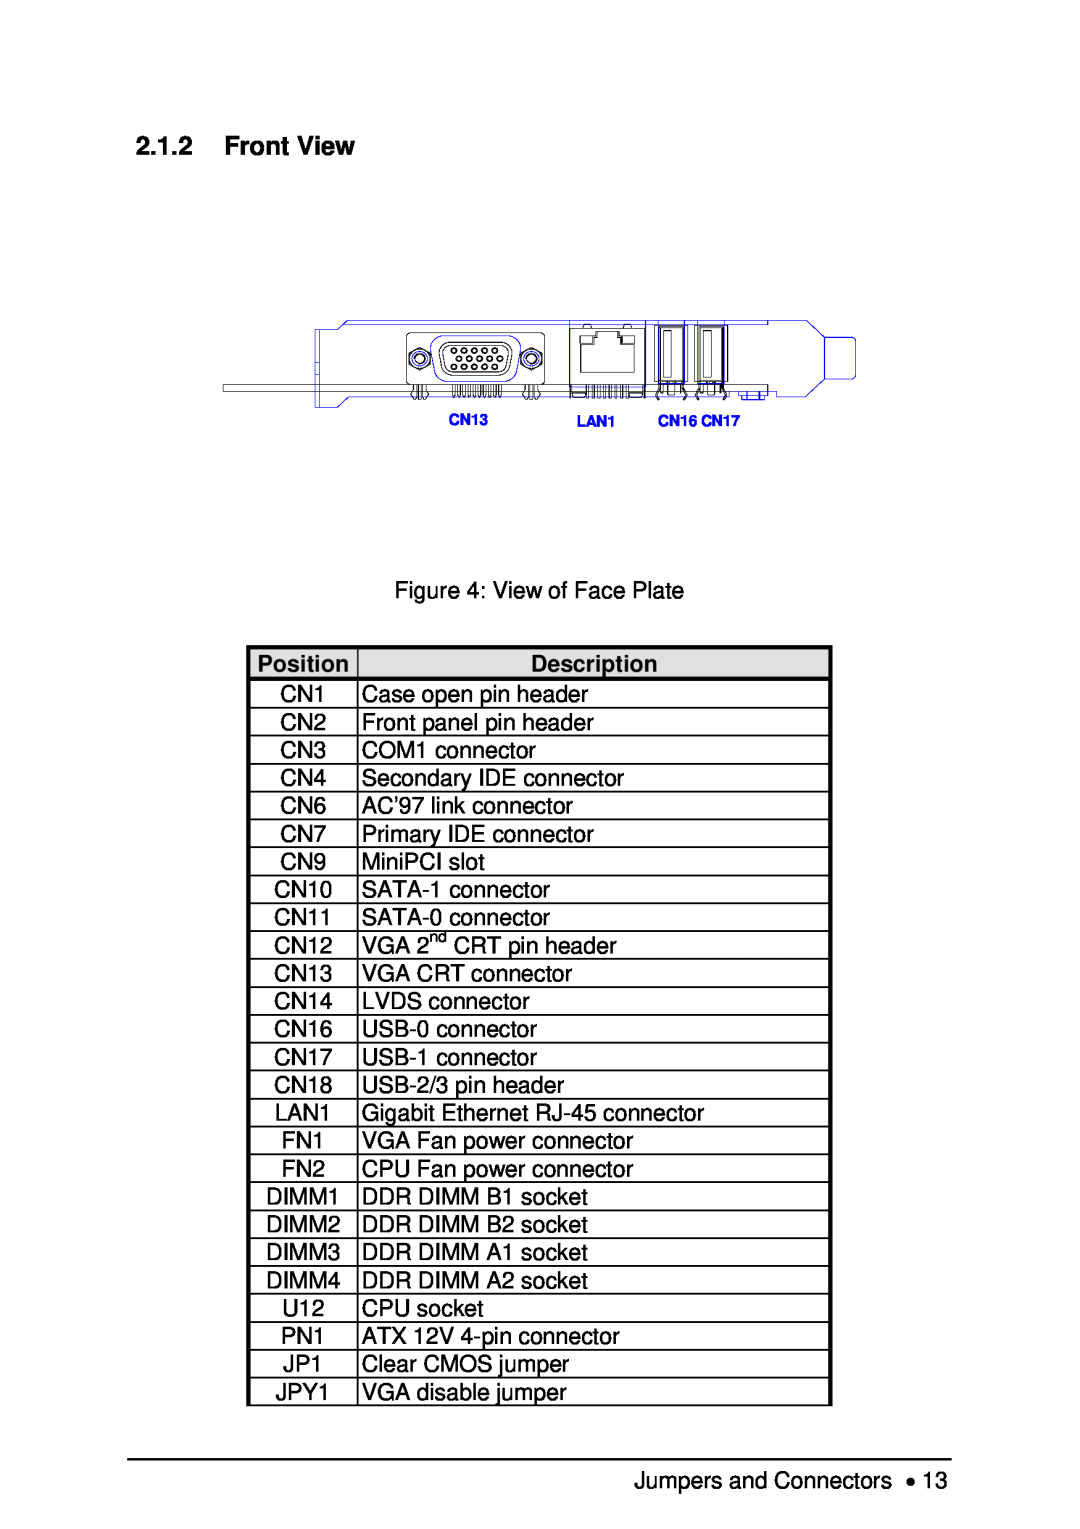 Intel NuPRO-850 user manual Front View, Position, Description 